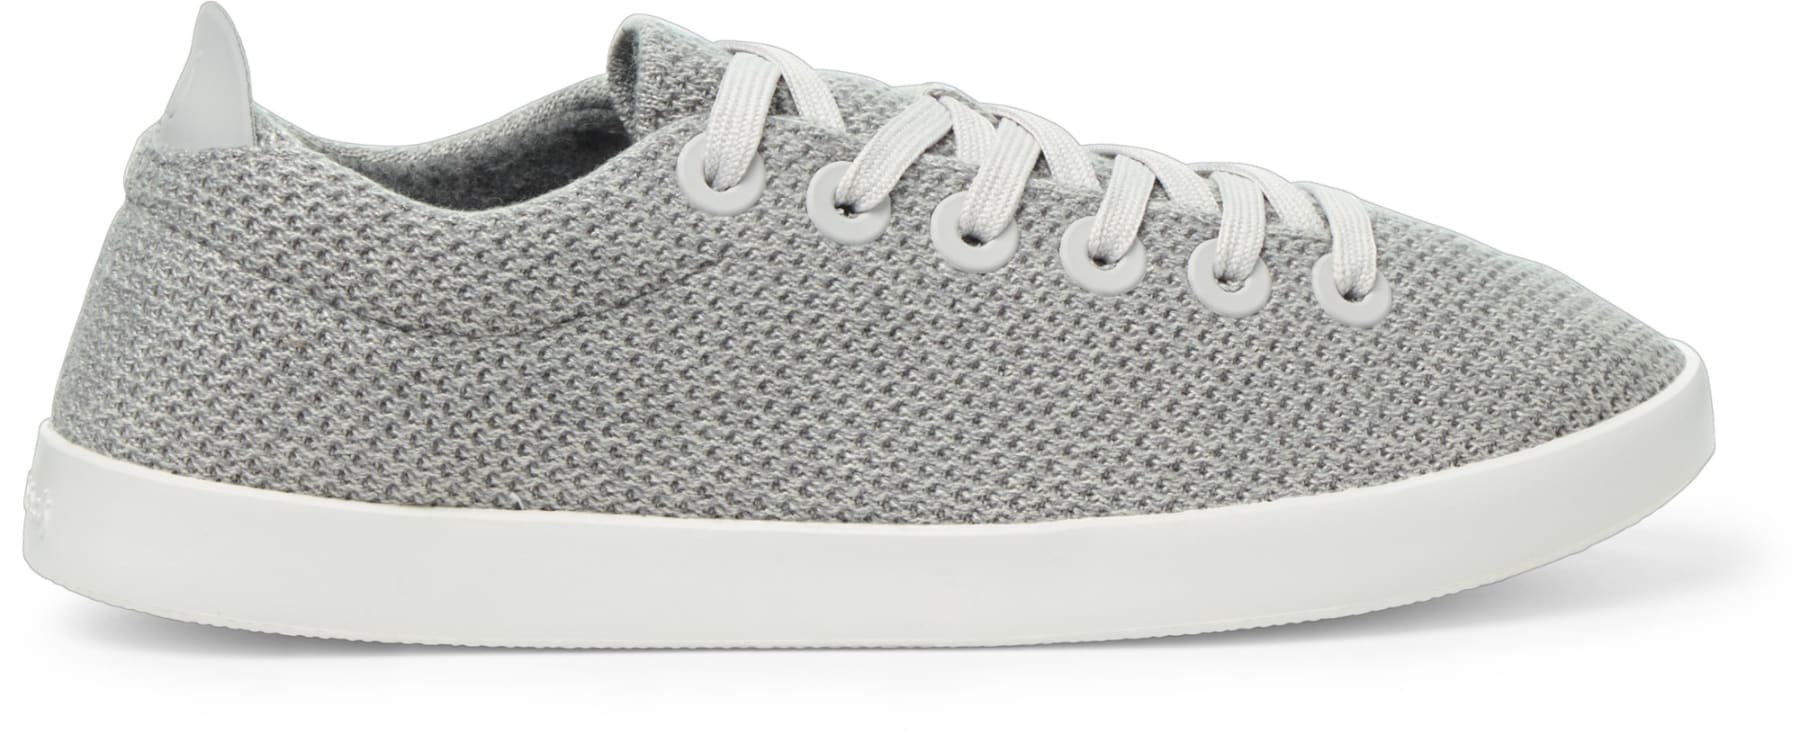 A pair of grey women's sneakers.